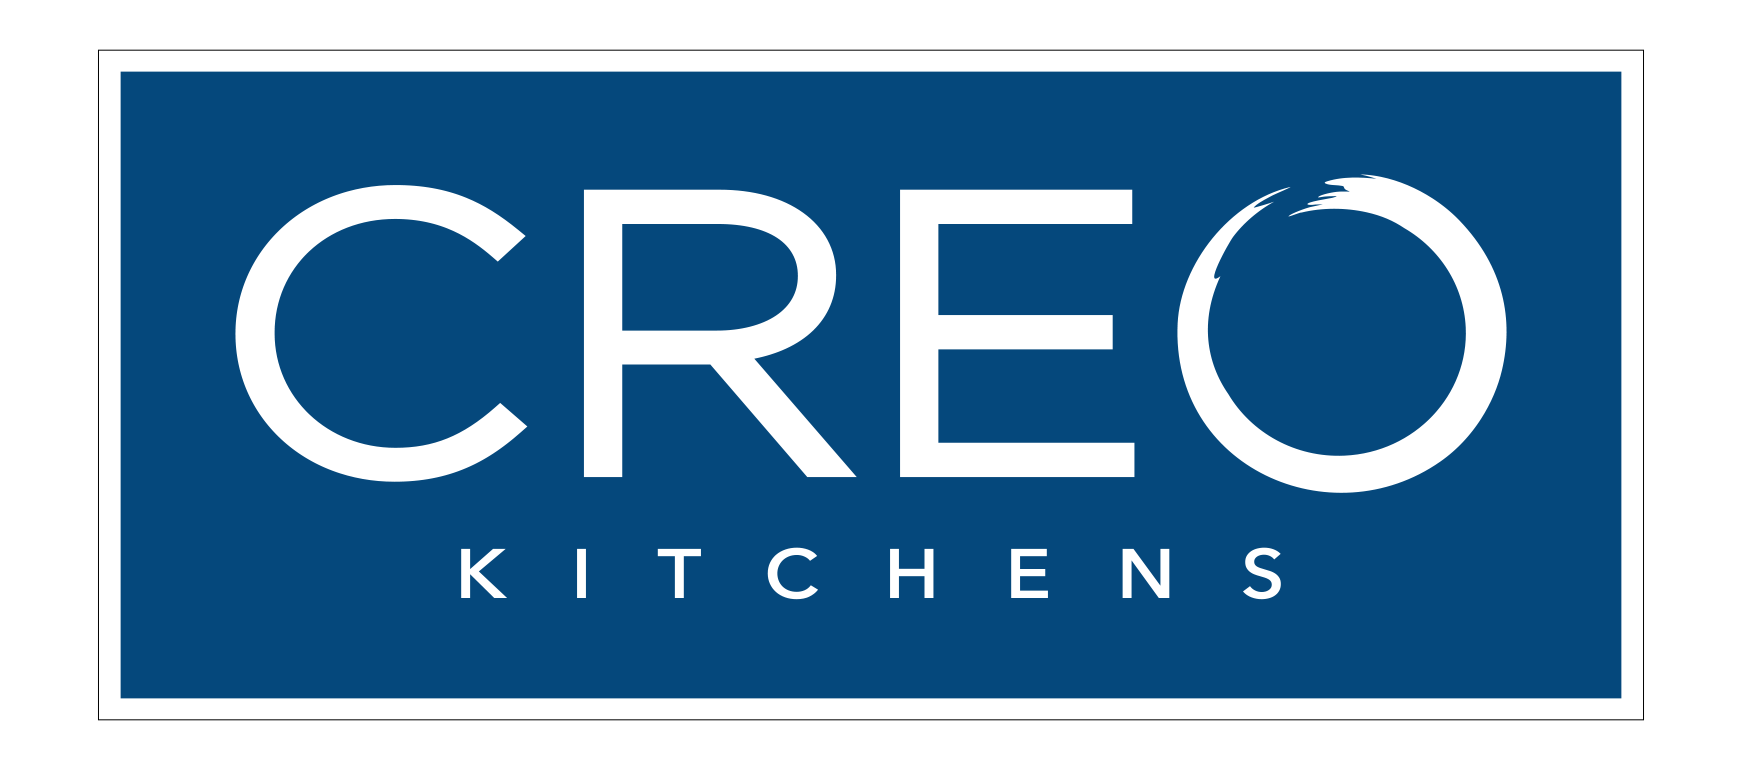 Mobili cucina su misura online - Creokitchens.it